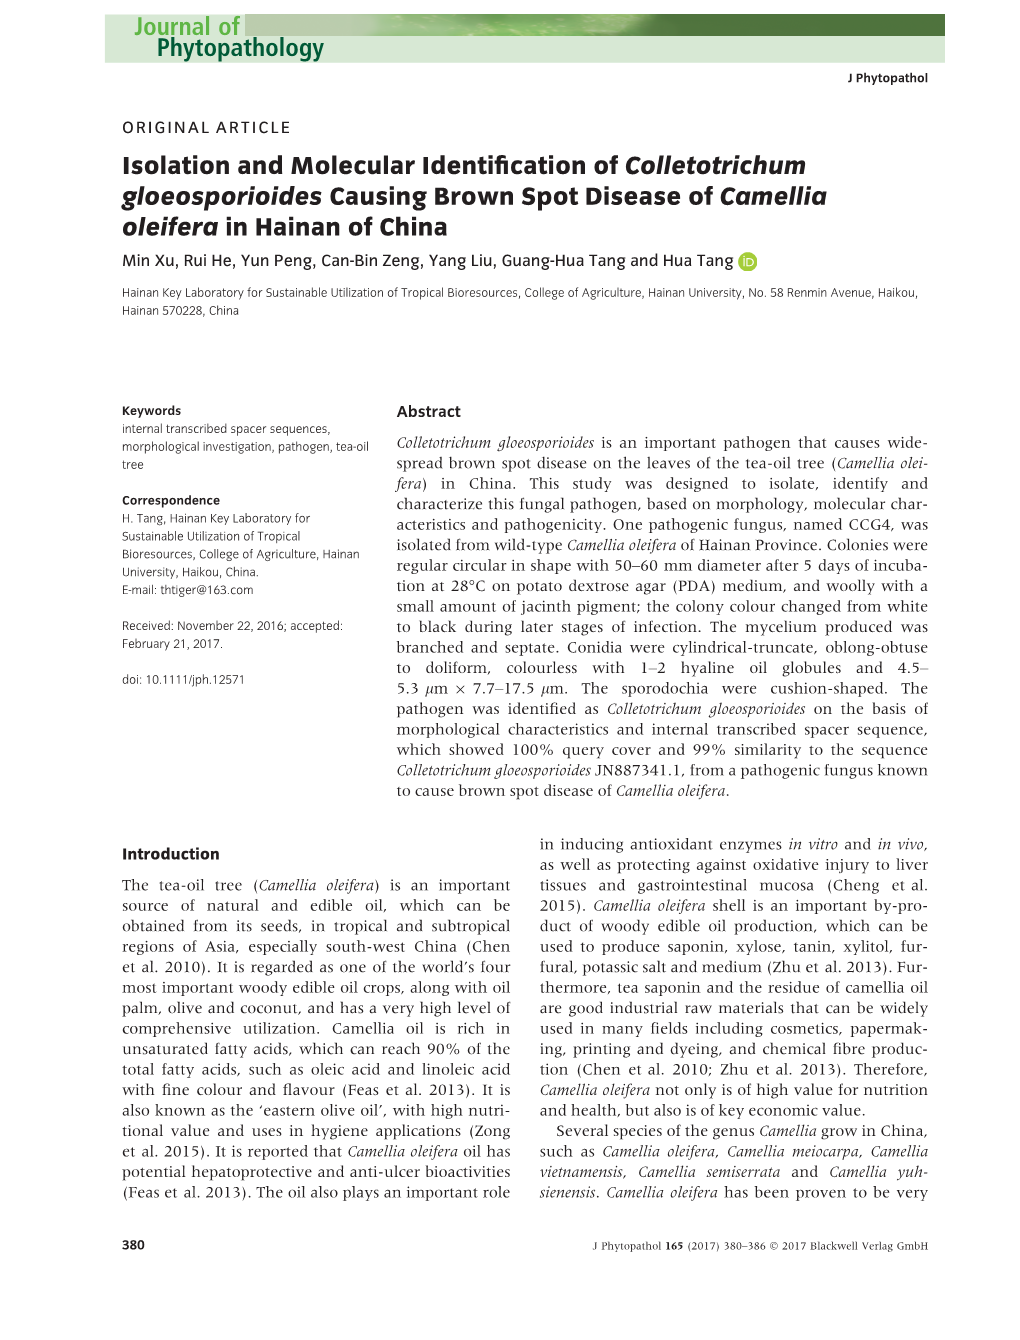 Isolation and Molecular Identification of Colletotrichum Gloeosporioides Causing Brown Spot Disease of Camellia Oleifera in Hain